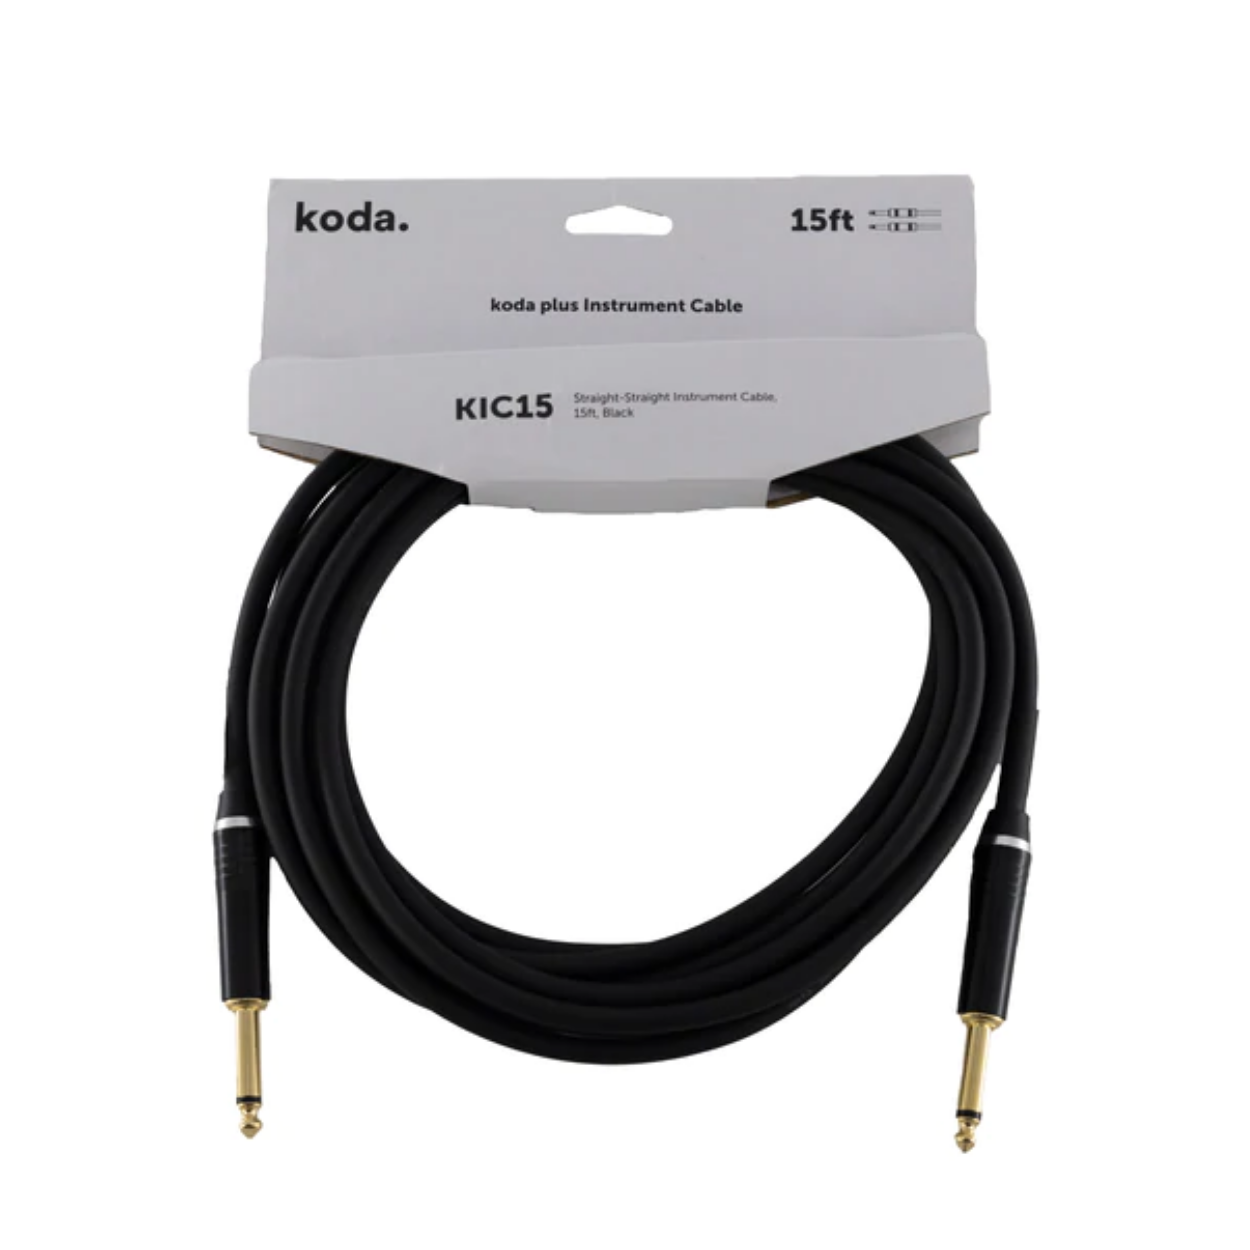 koda plus KIC15 Straight-Straight Instrument Cable, 15ft, Black